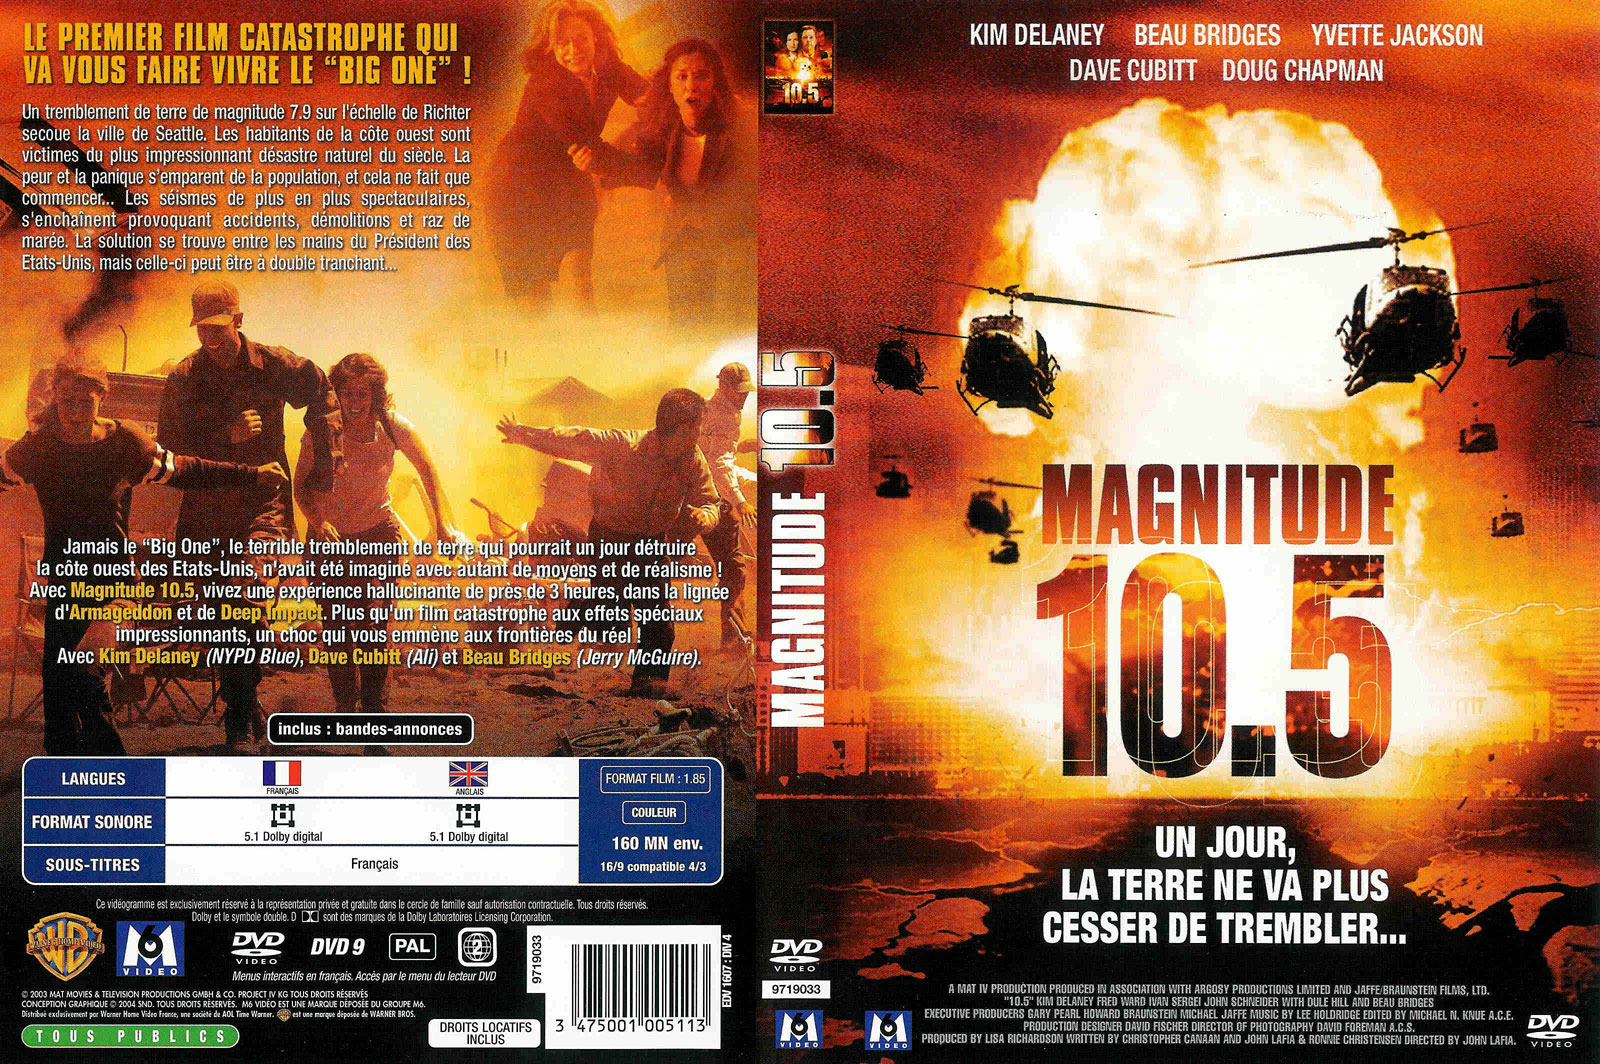 Jaquette DVD Magnitude 10 5